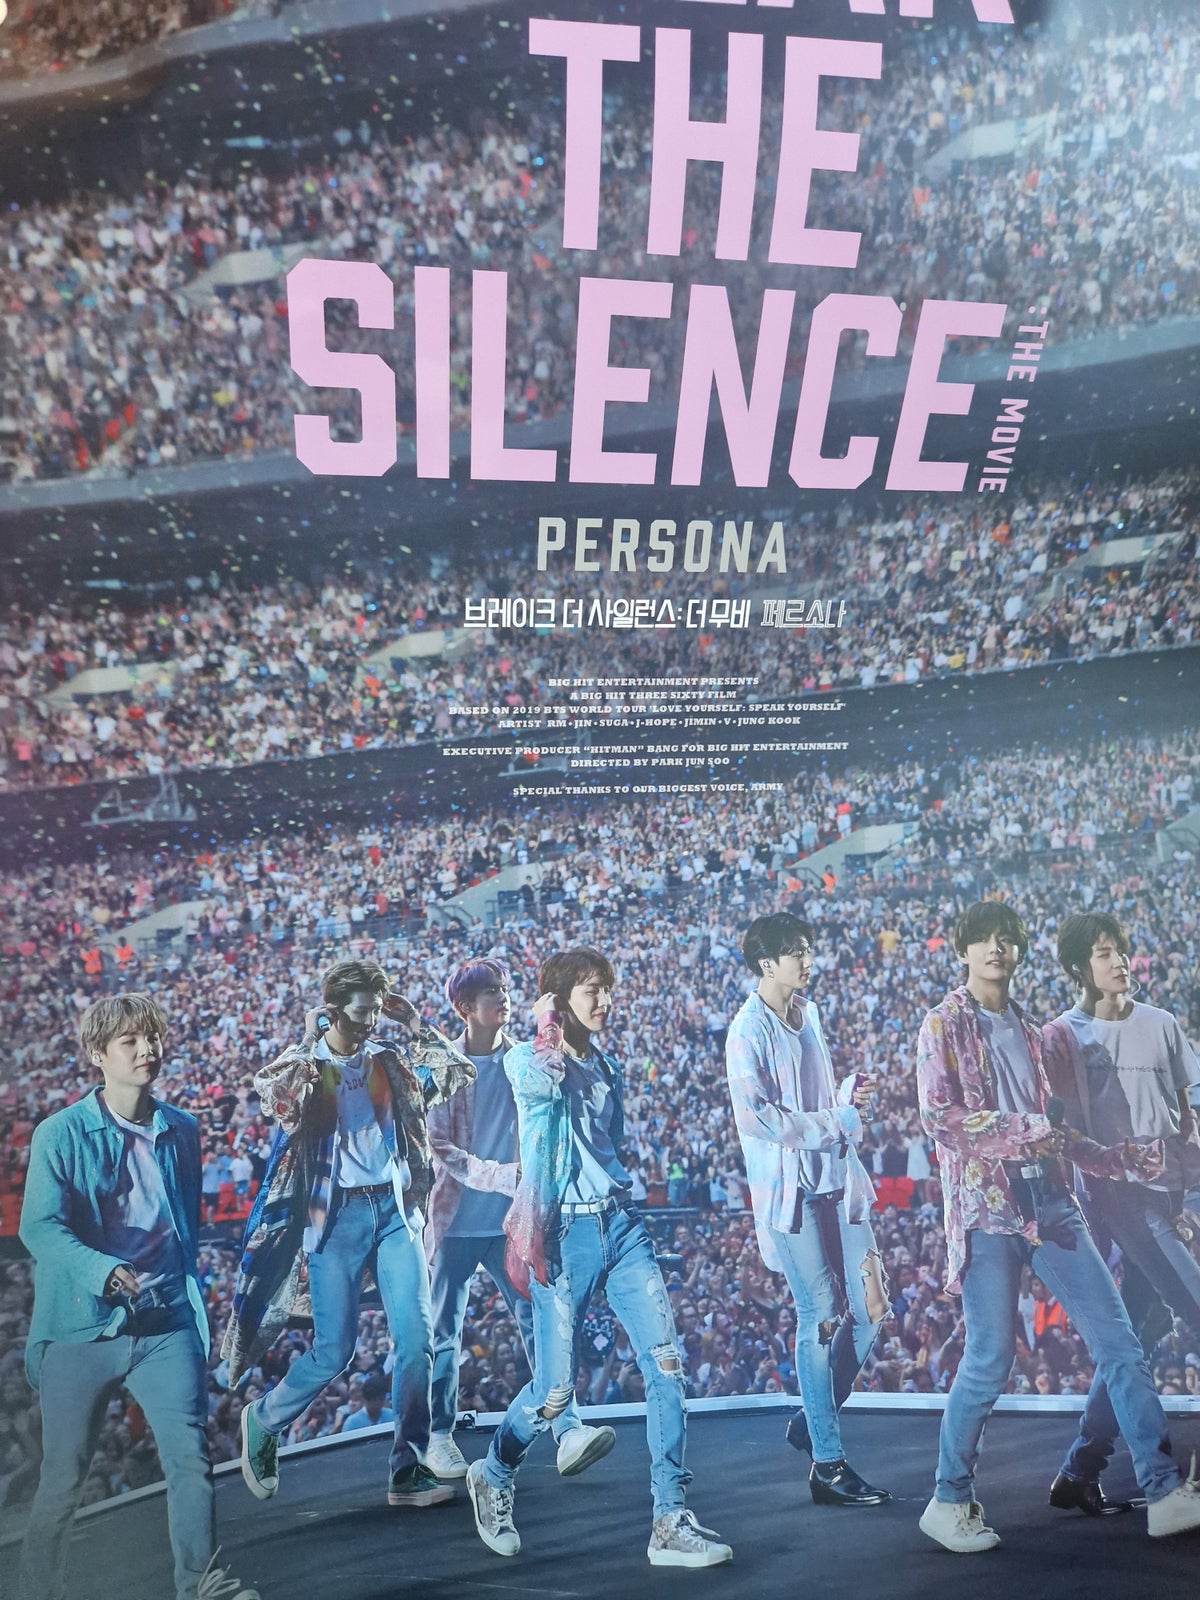 BTS Break the Silence: the Movie